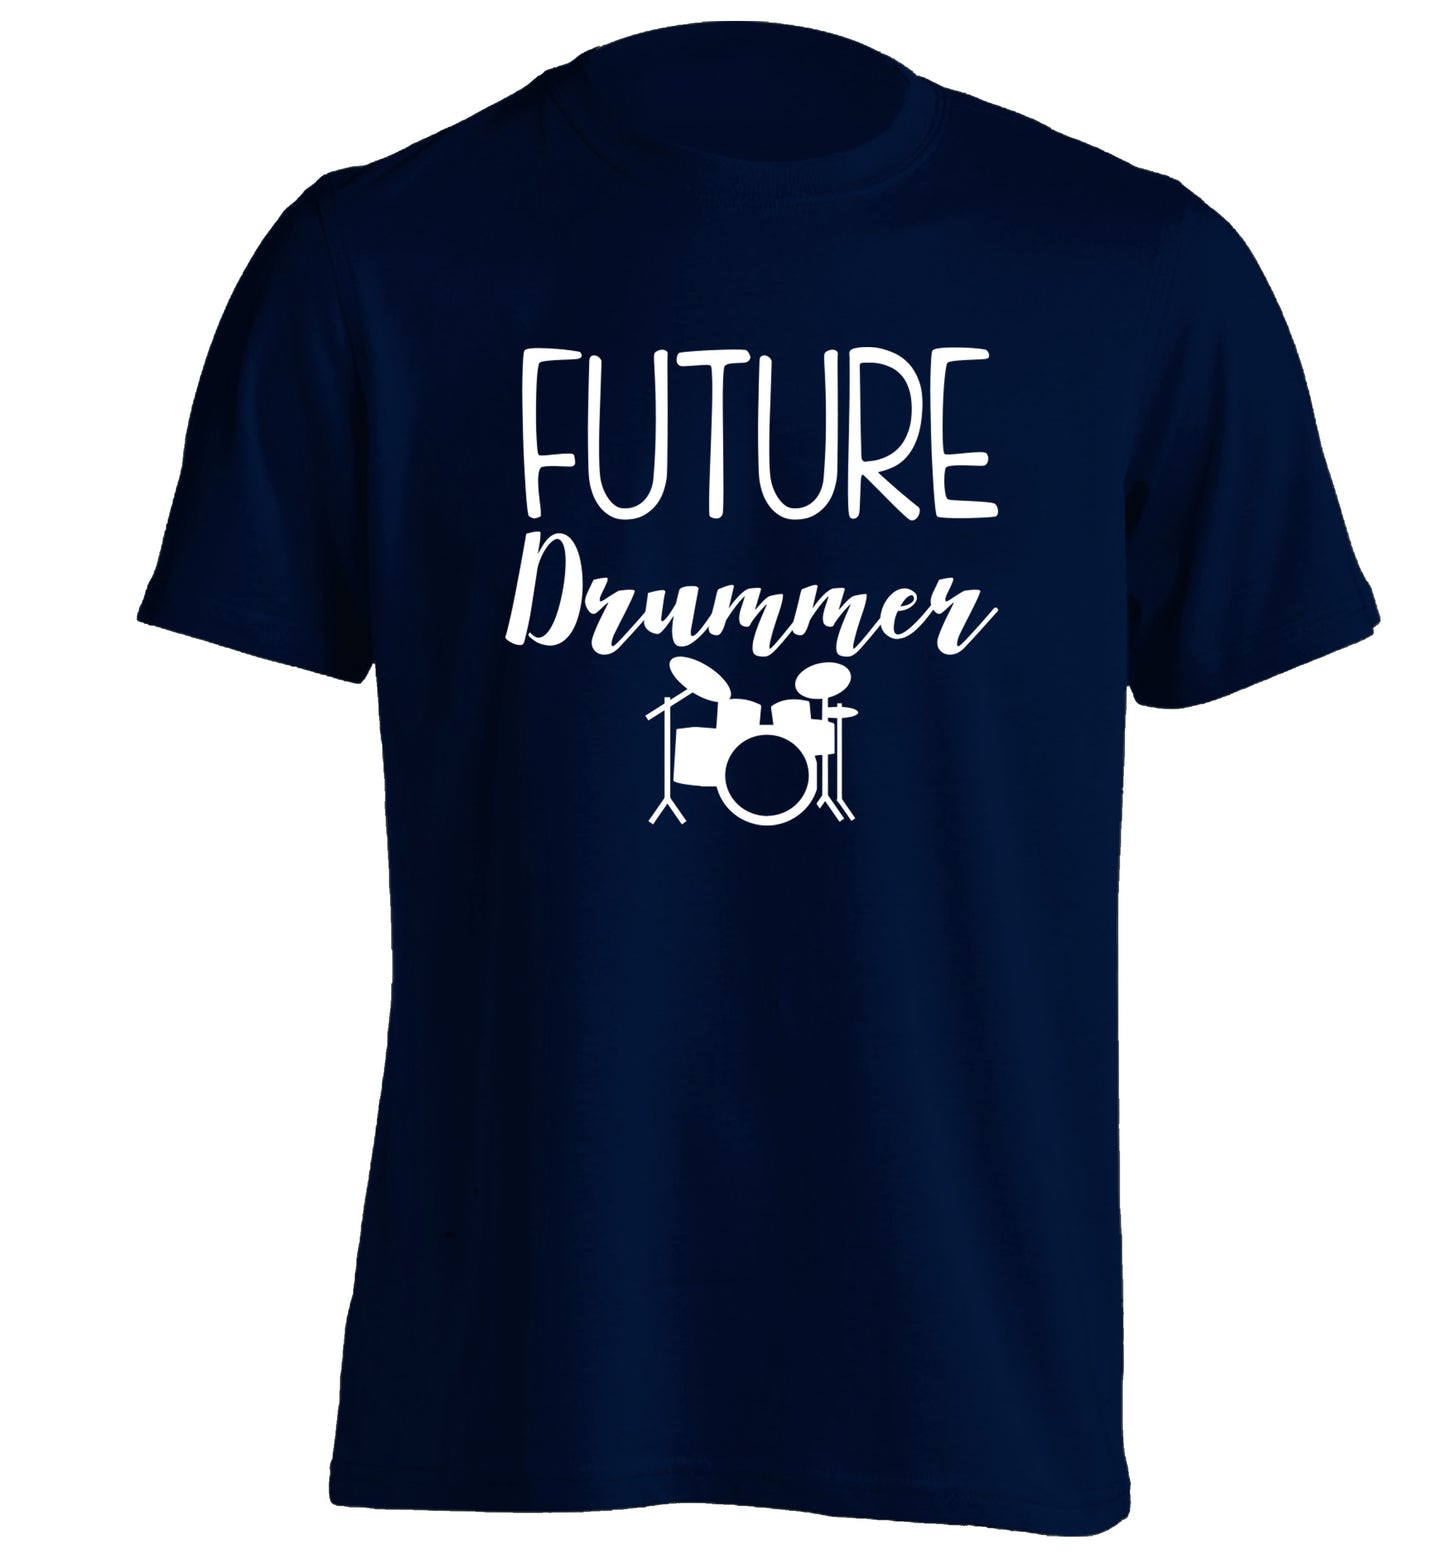 Future drummer adults unisex navy Tshirt 2XL